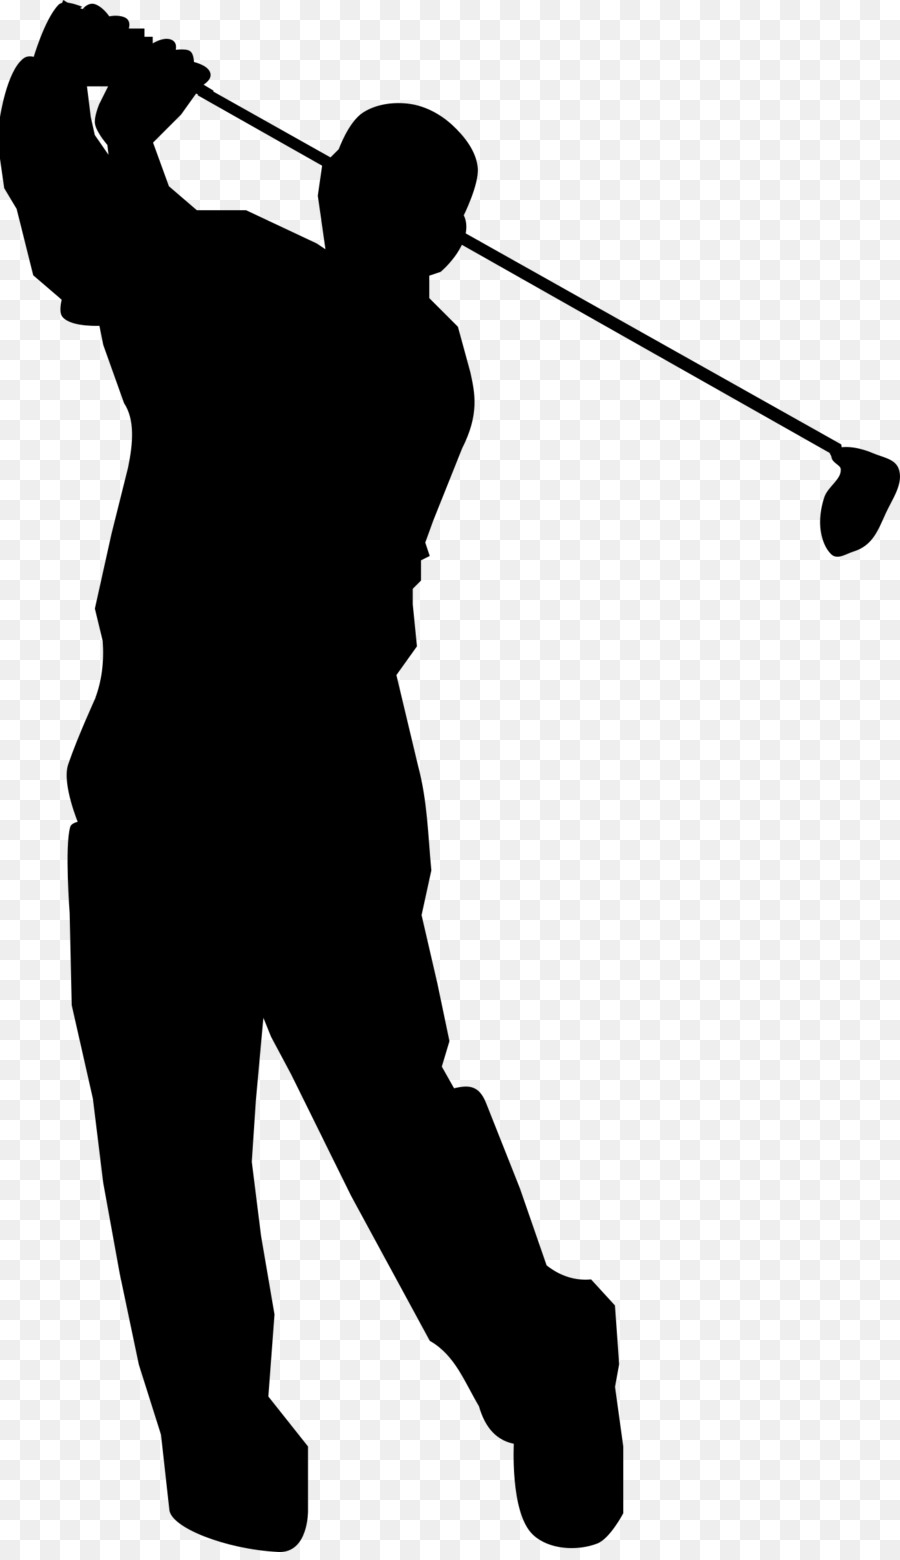 Golf Clubs Sport Golf stroke mechanics Clip art - Golfer png download - 1392*2400 - Free Transparent Golf png Download.